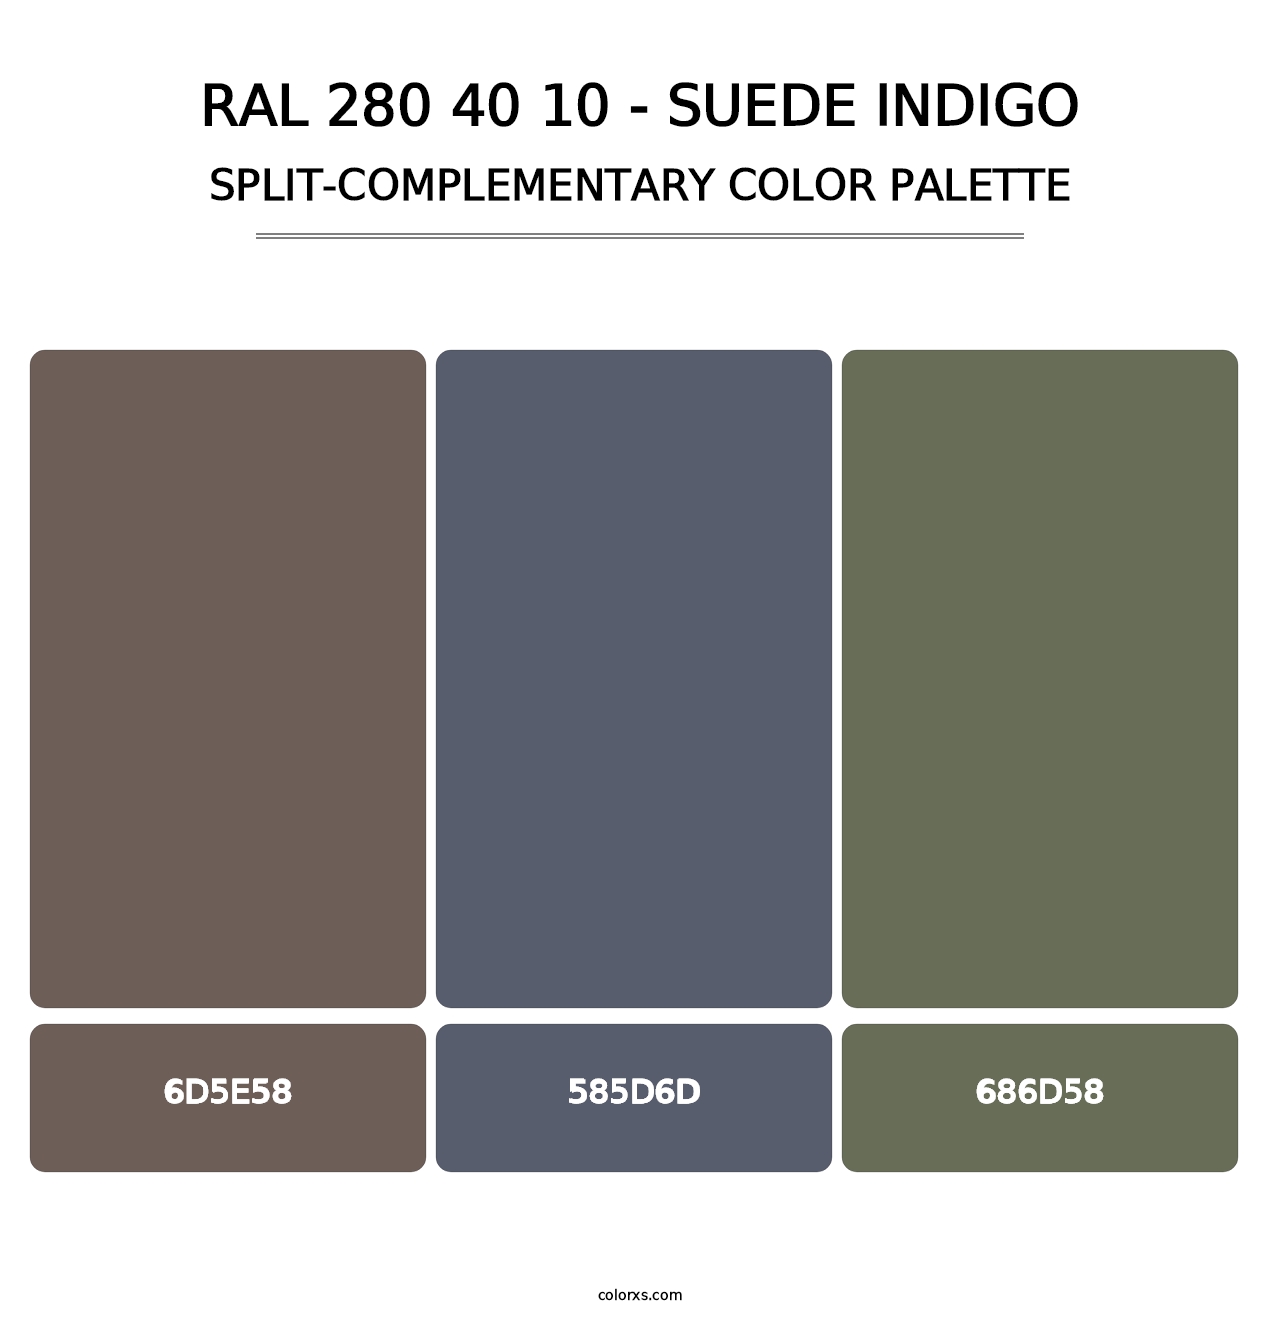 RAL 280 40 10 - Suede Indigo - Split-Complementary Color Palette